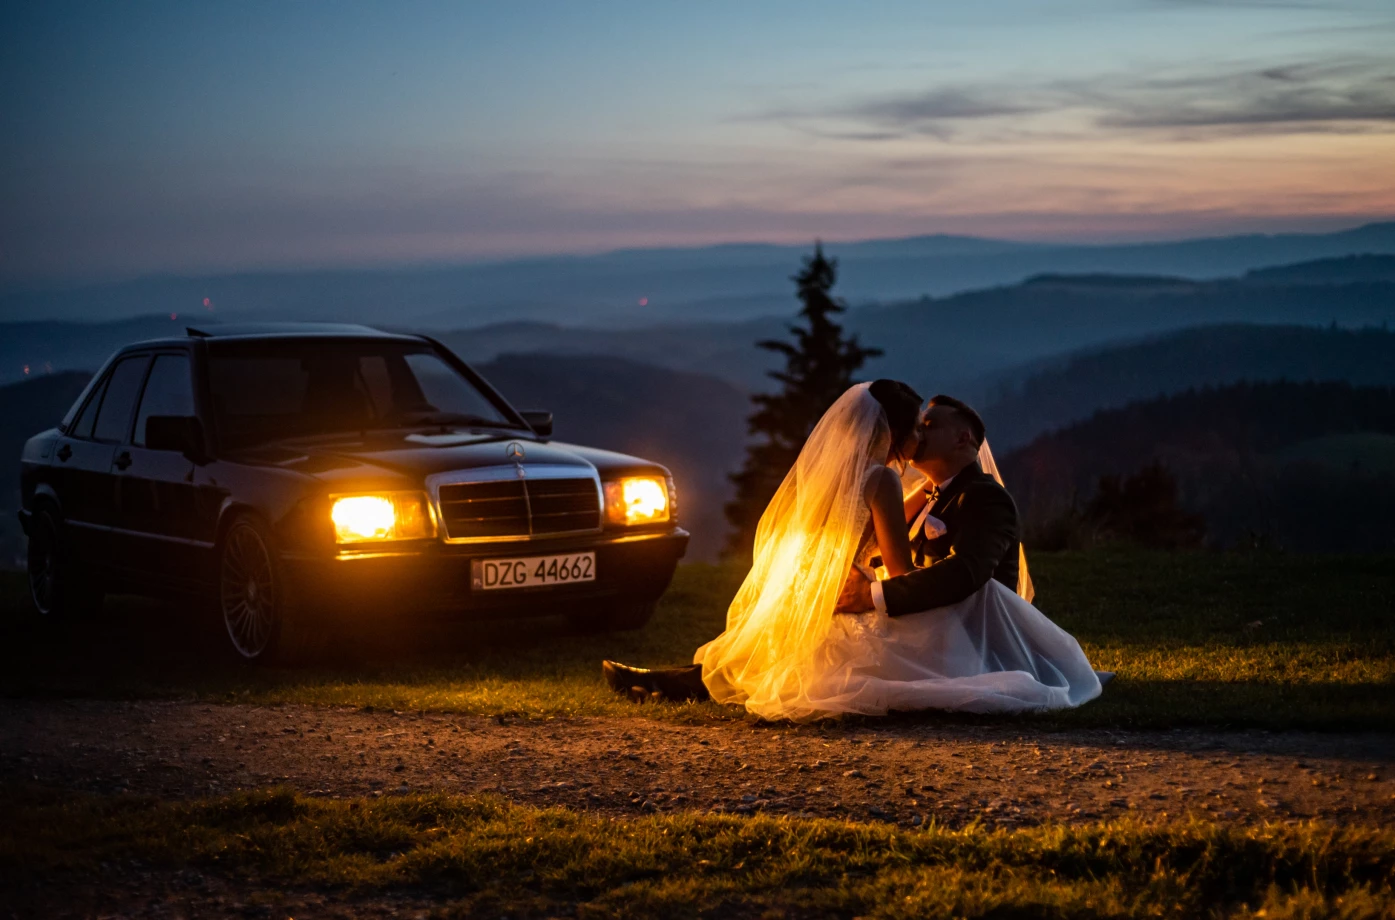 fotograf wroclaw piotr-zanin portfolio zdjecia slubne inspiracje wesele plener slubny sesja slubna